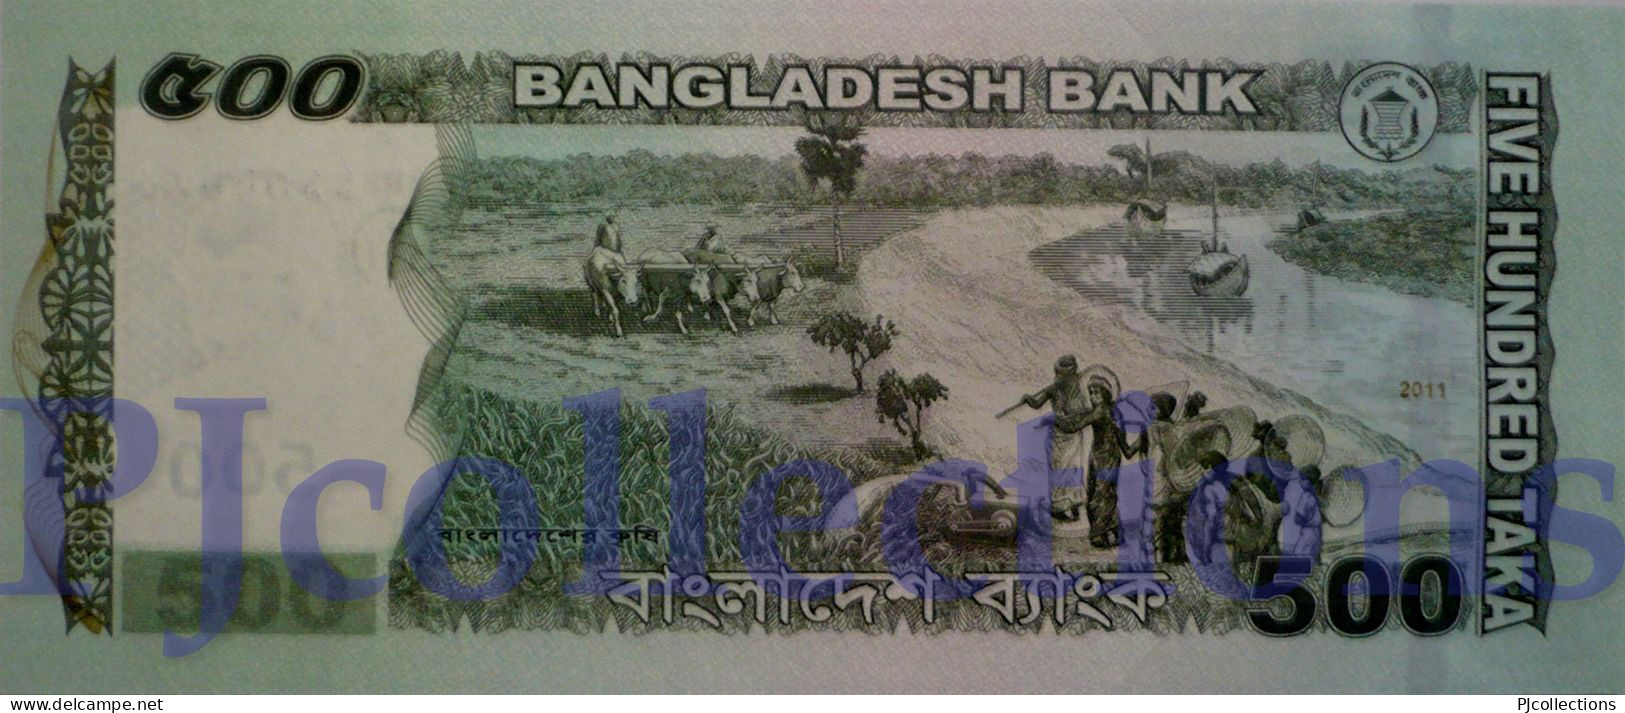 BANGLADESH 500 TAKA 2011 PICK 58a UNC - Bangladesh